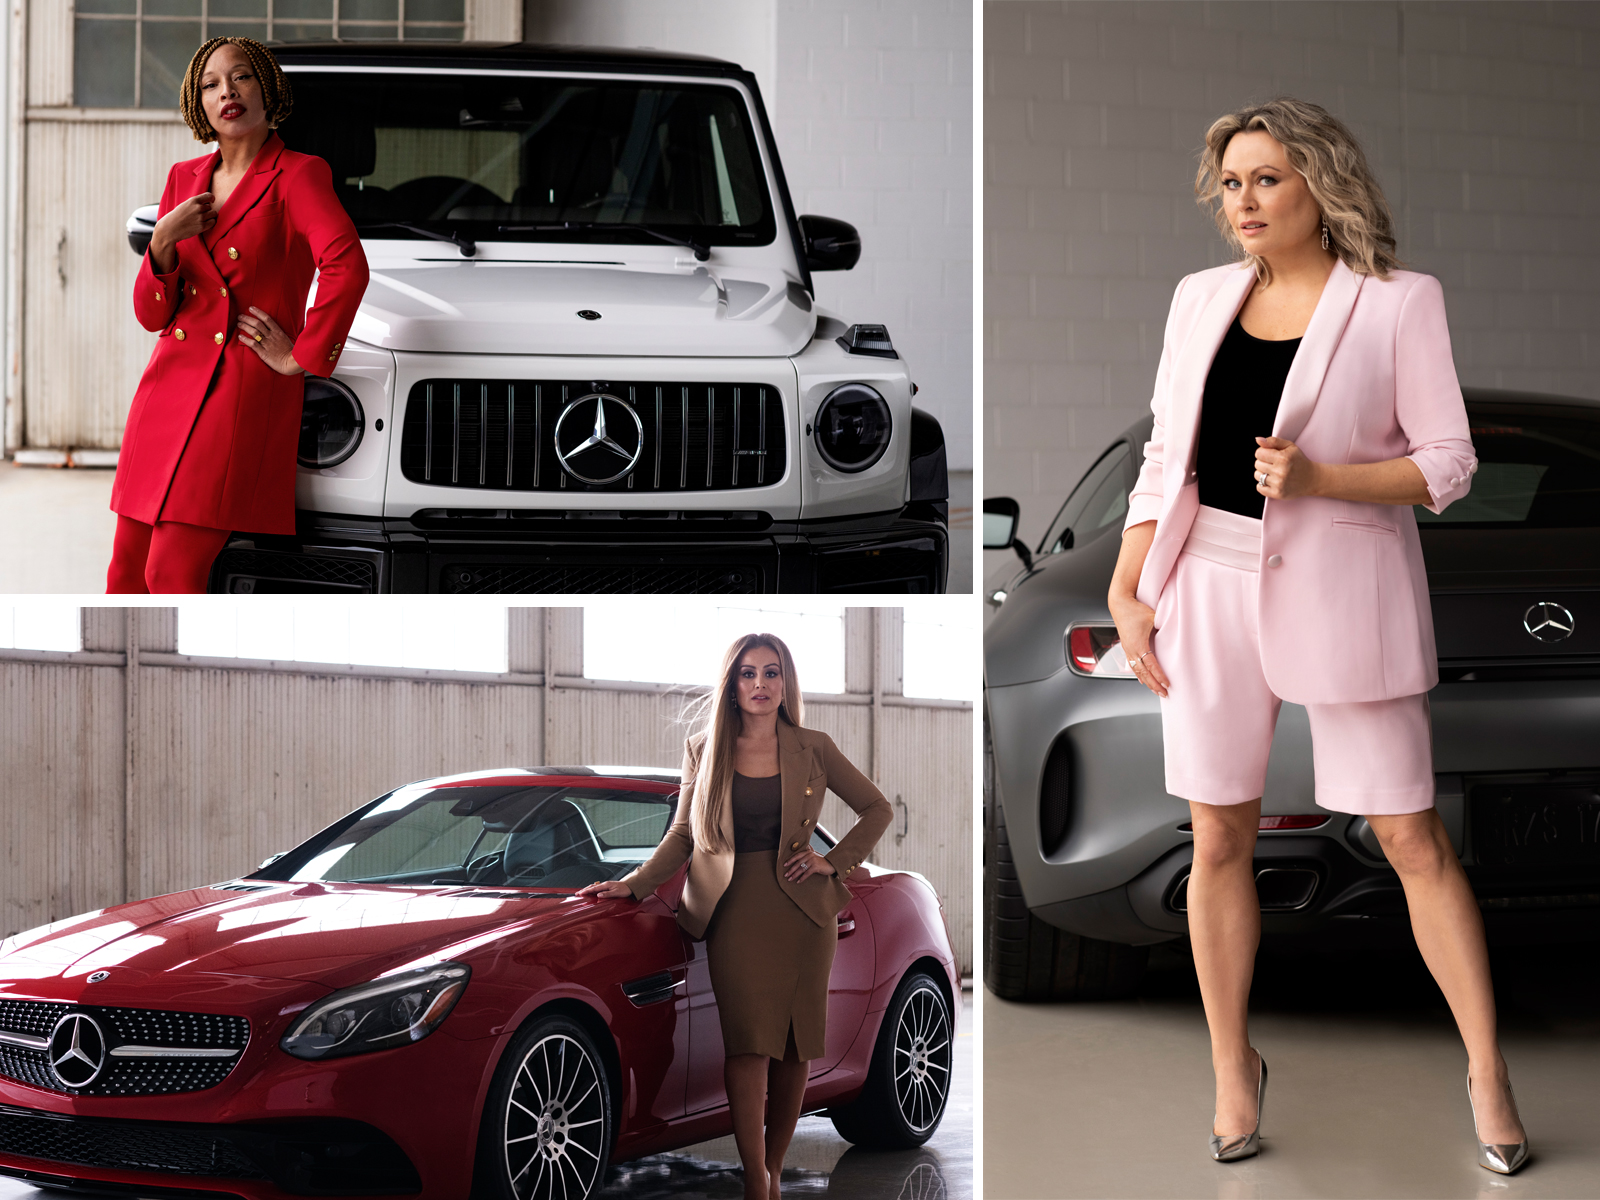 Three high-profile Canadian women—Mitsou Gélinas, Melissa Grelo, and Stacey McKenzie